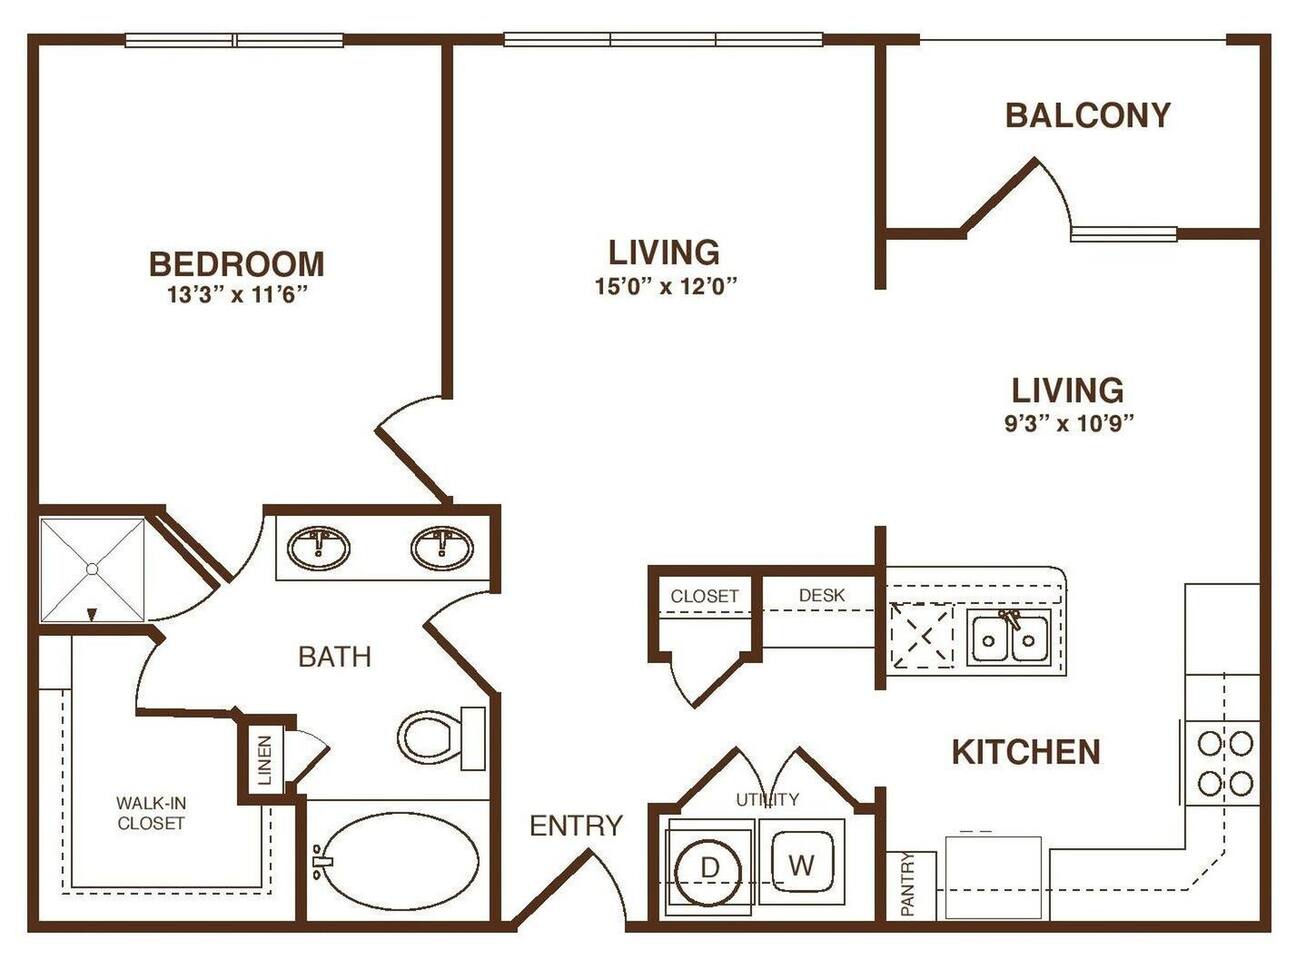 Floorplan diagram for The Langston, showing 1 bedroom